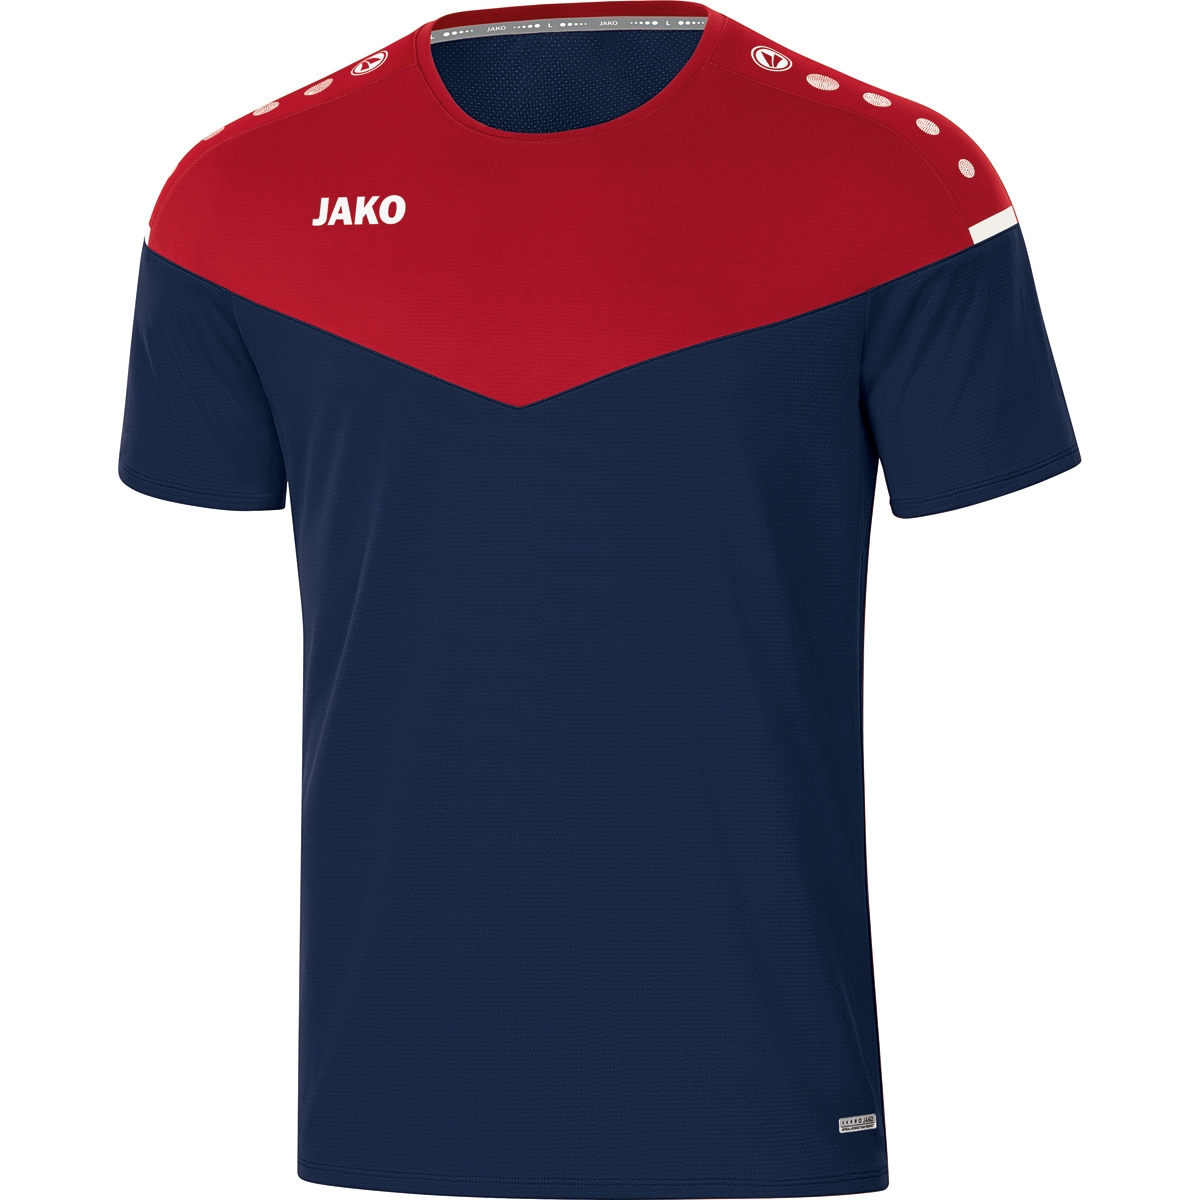 JAKO T-Shirt Champ 2.0 marine/chili Kinder, 6120 rot, Gr. 128